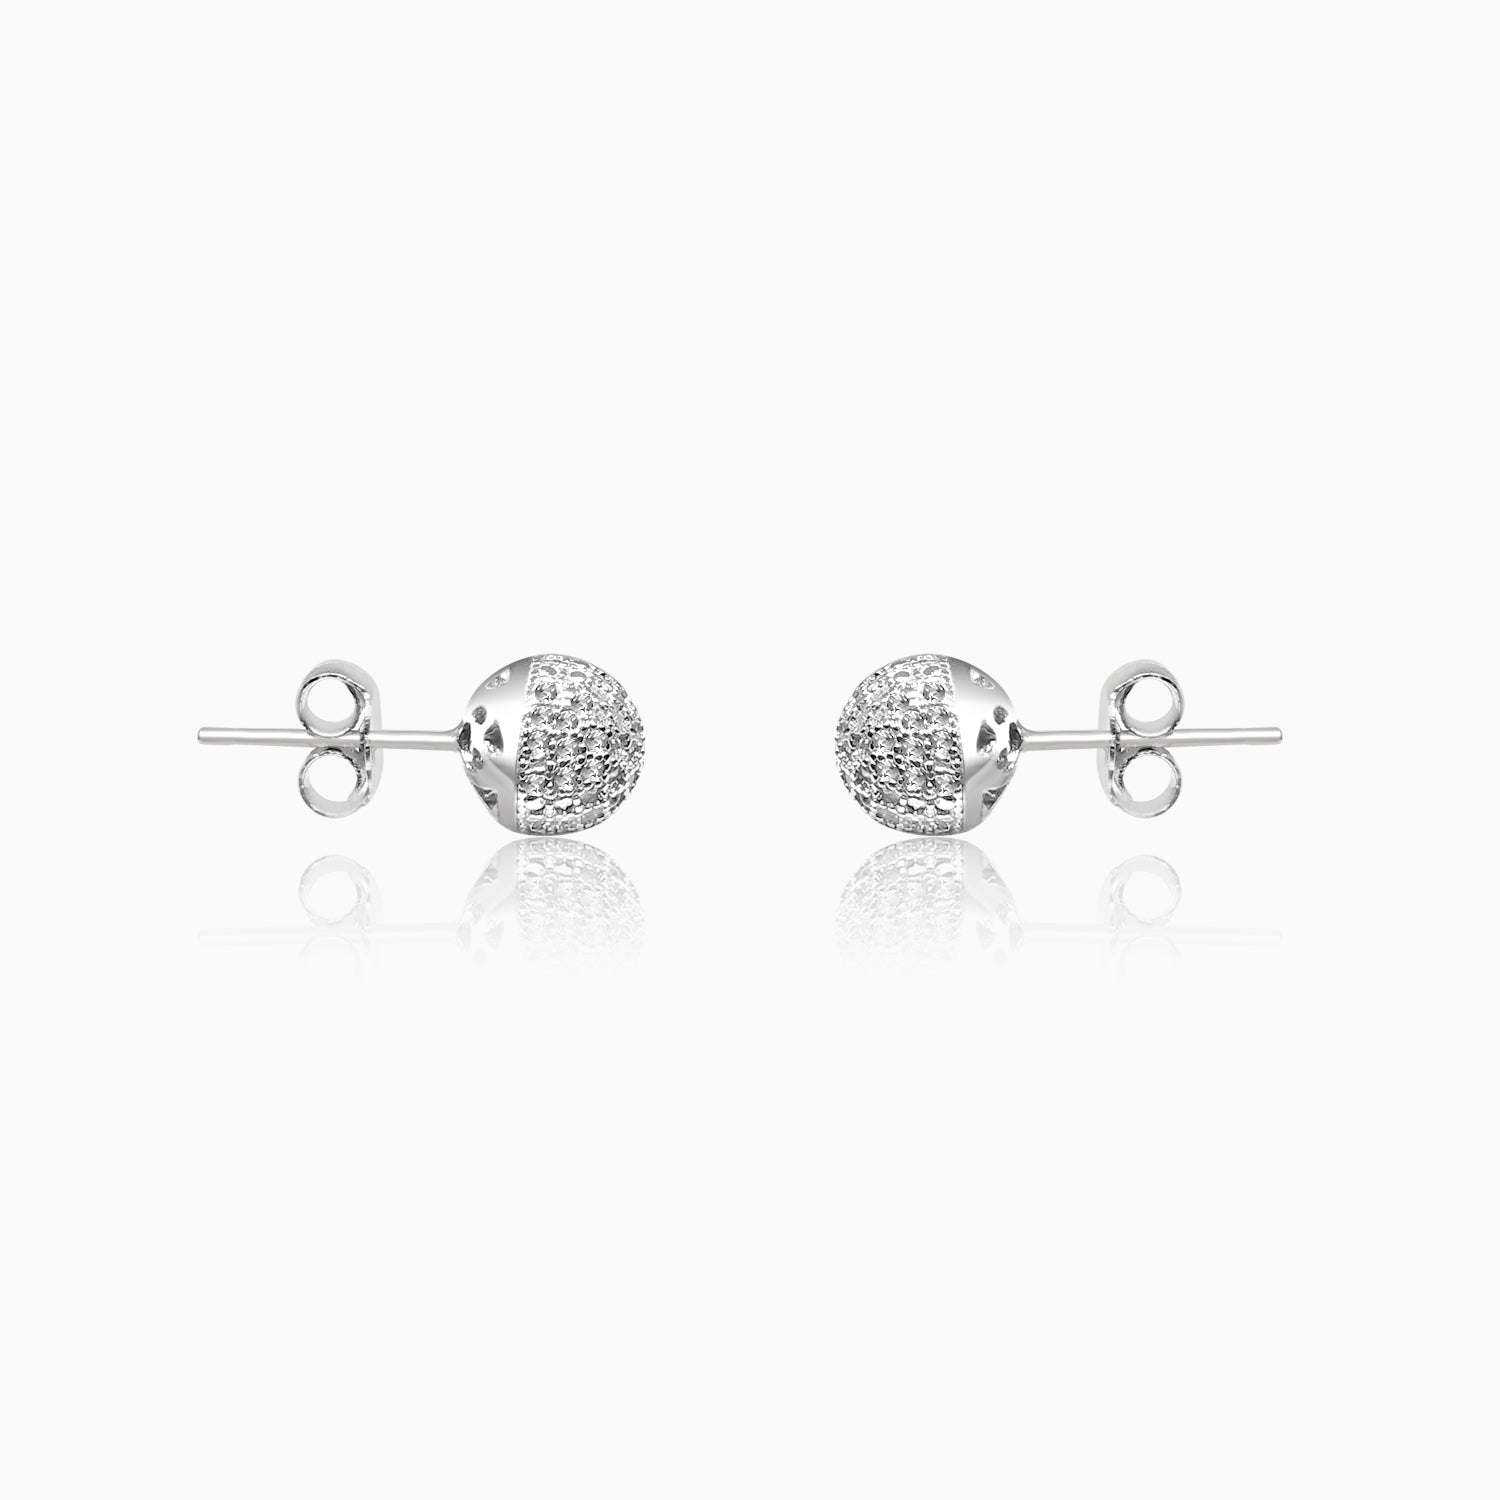 Silver Sparkling Filigree Ball Stud Earrings